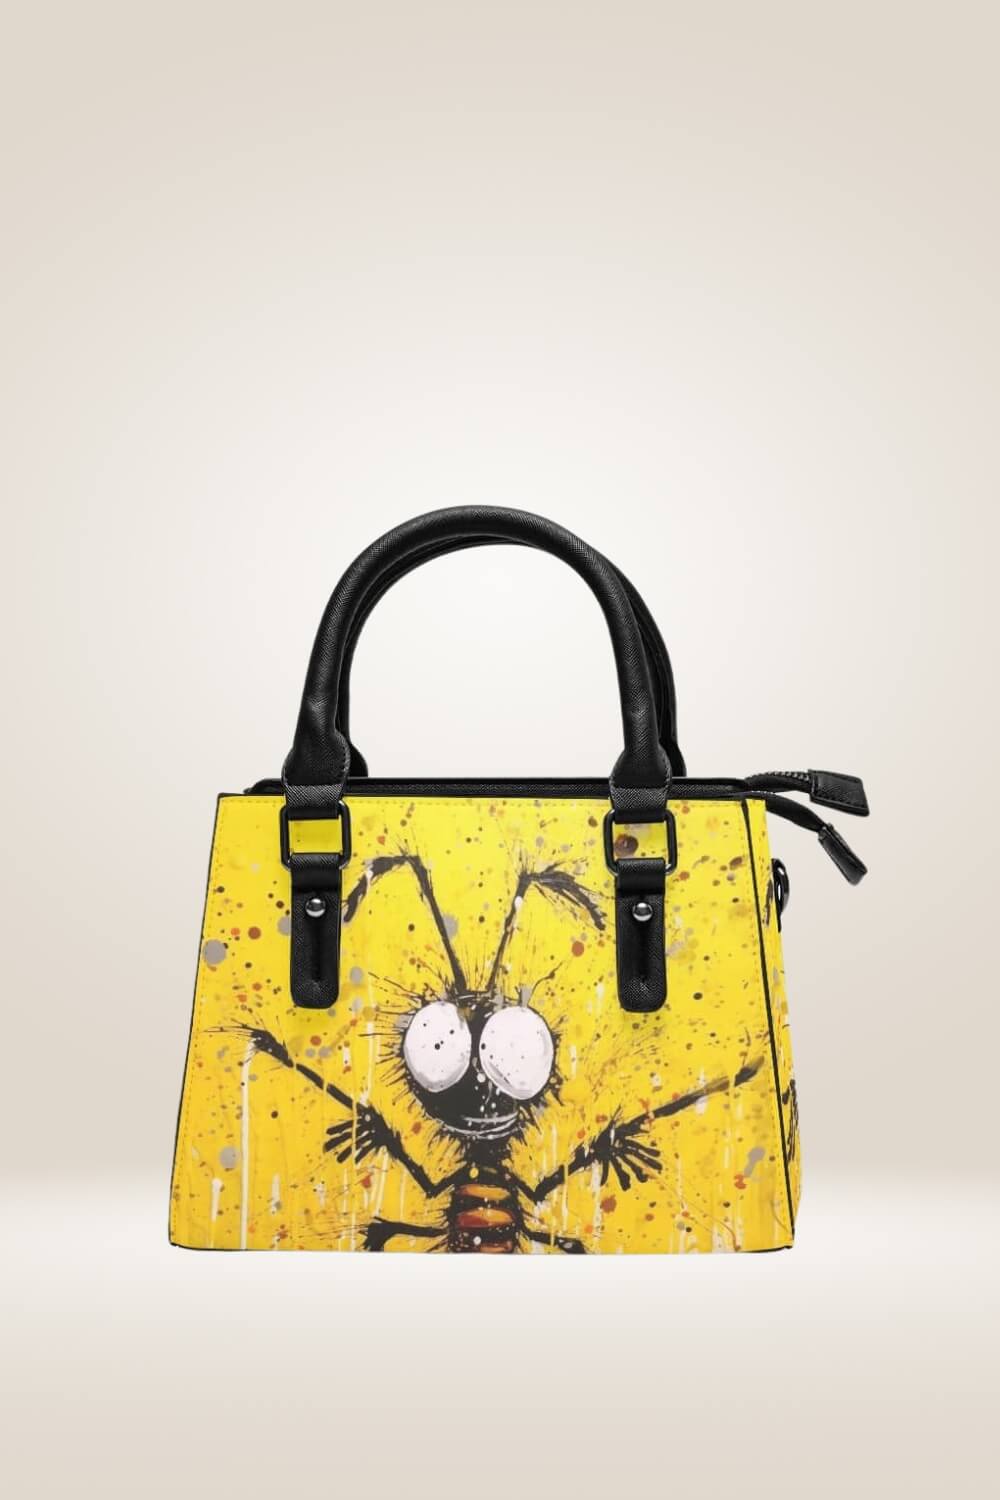 Cartoon Bee Yellow Satchel Bag - TGC Boutique - Satchel Handbag